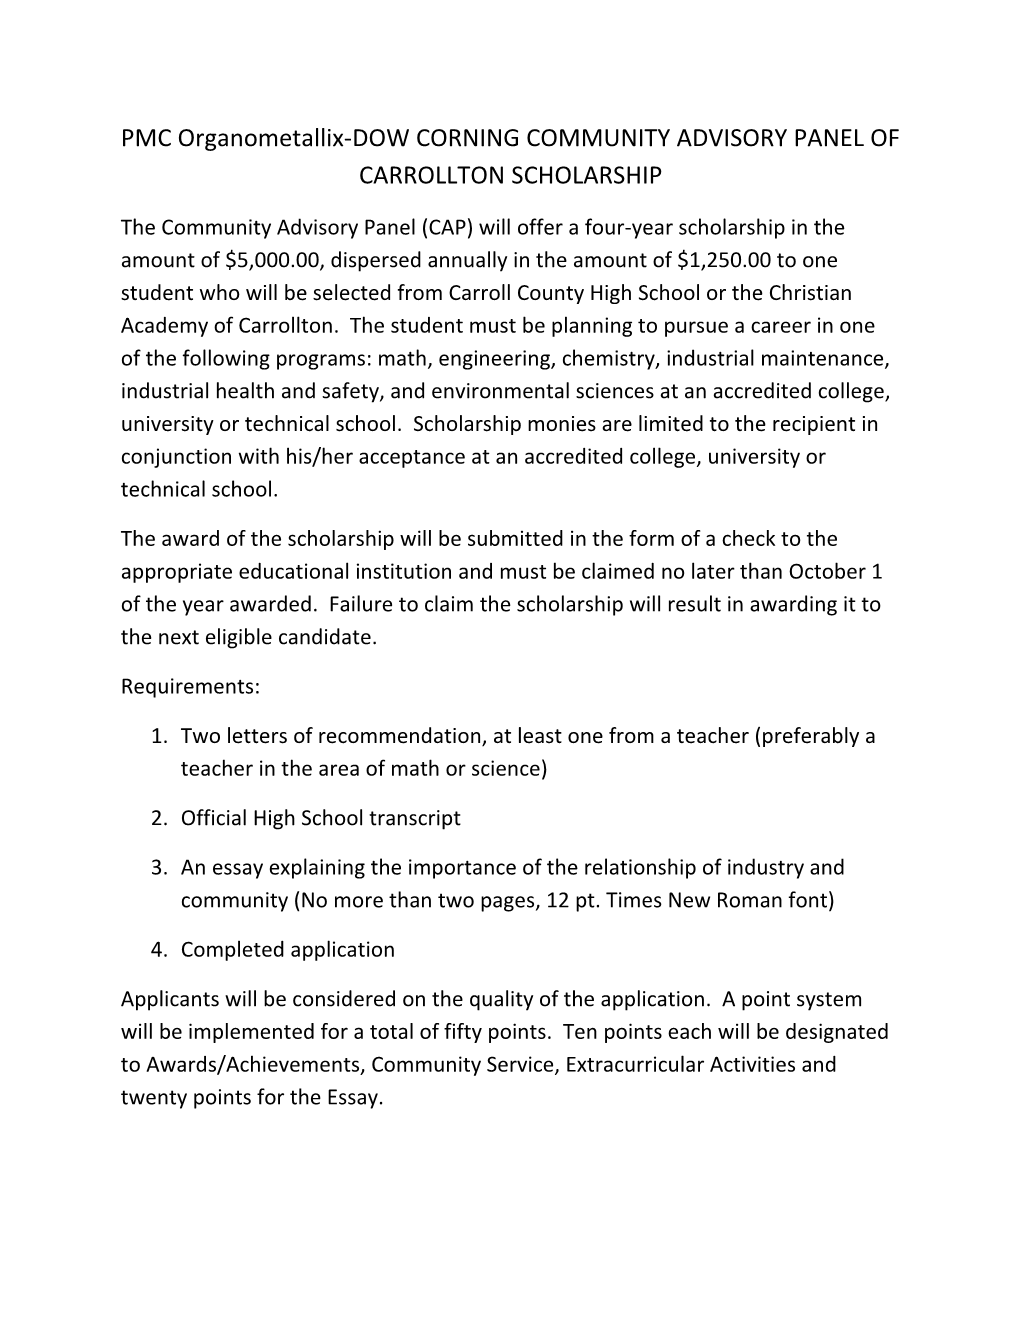 Arkema-Dow Corning Community Advisory Panel of Carrollton Scholarship